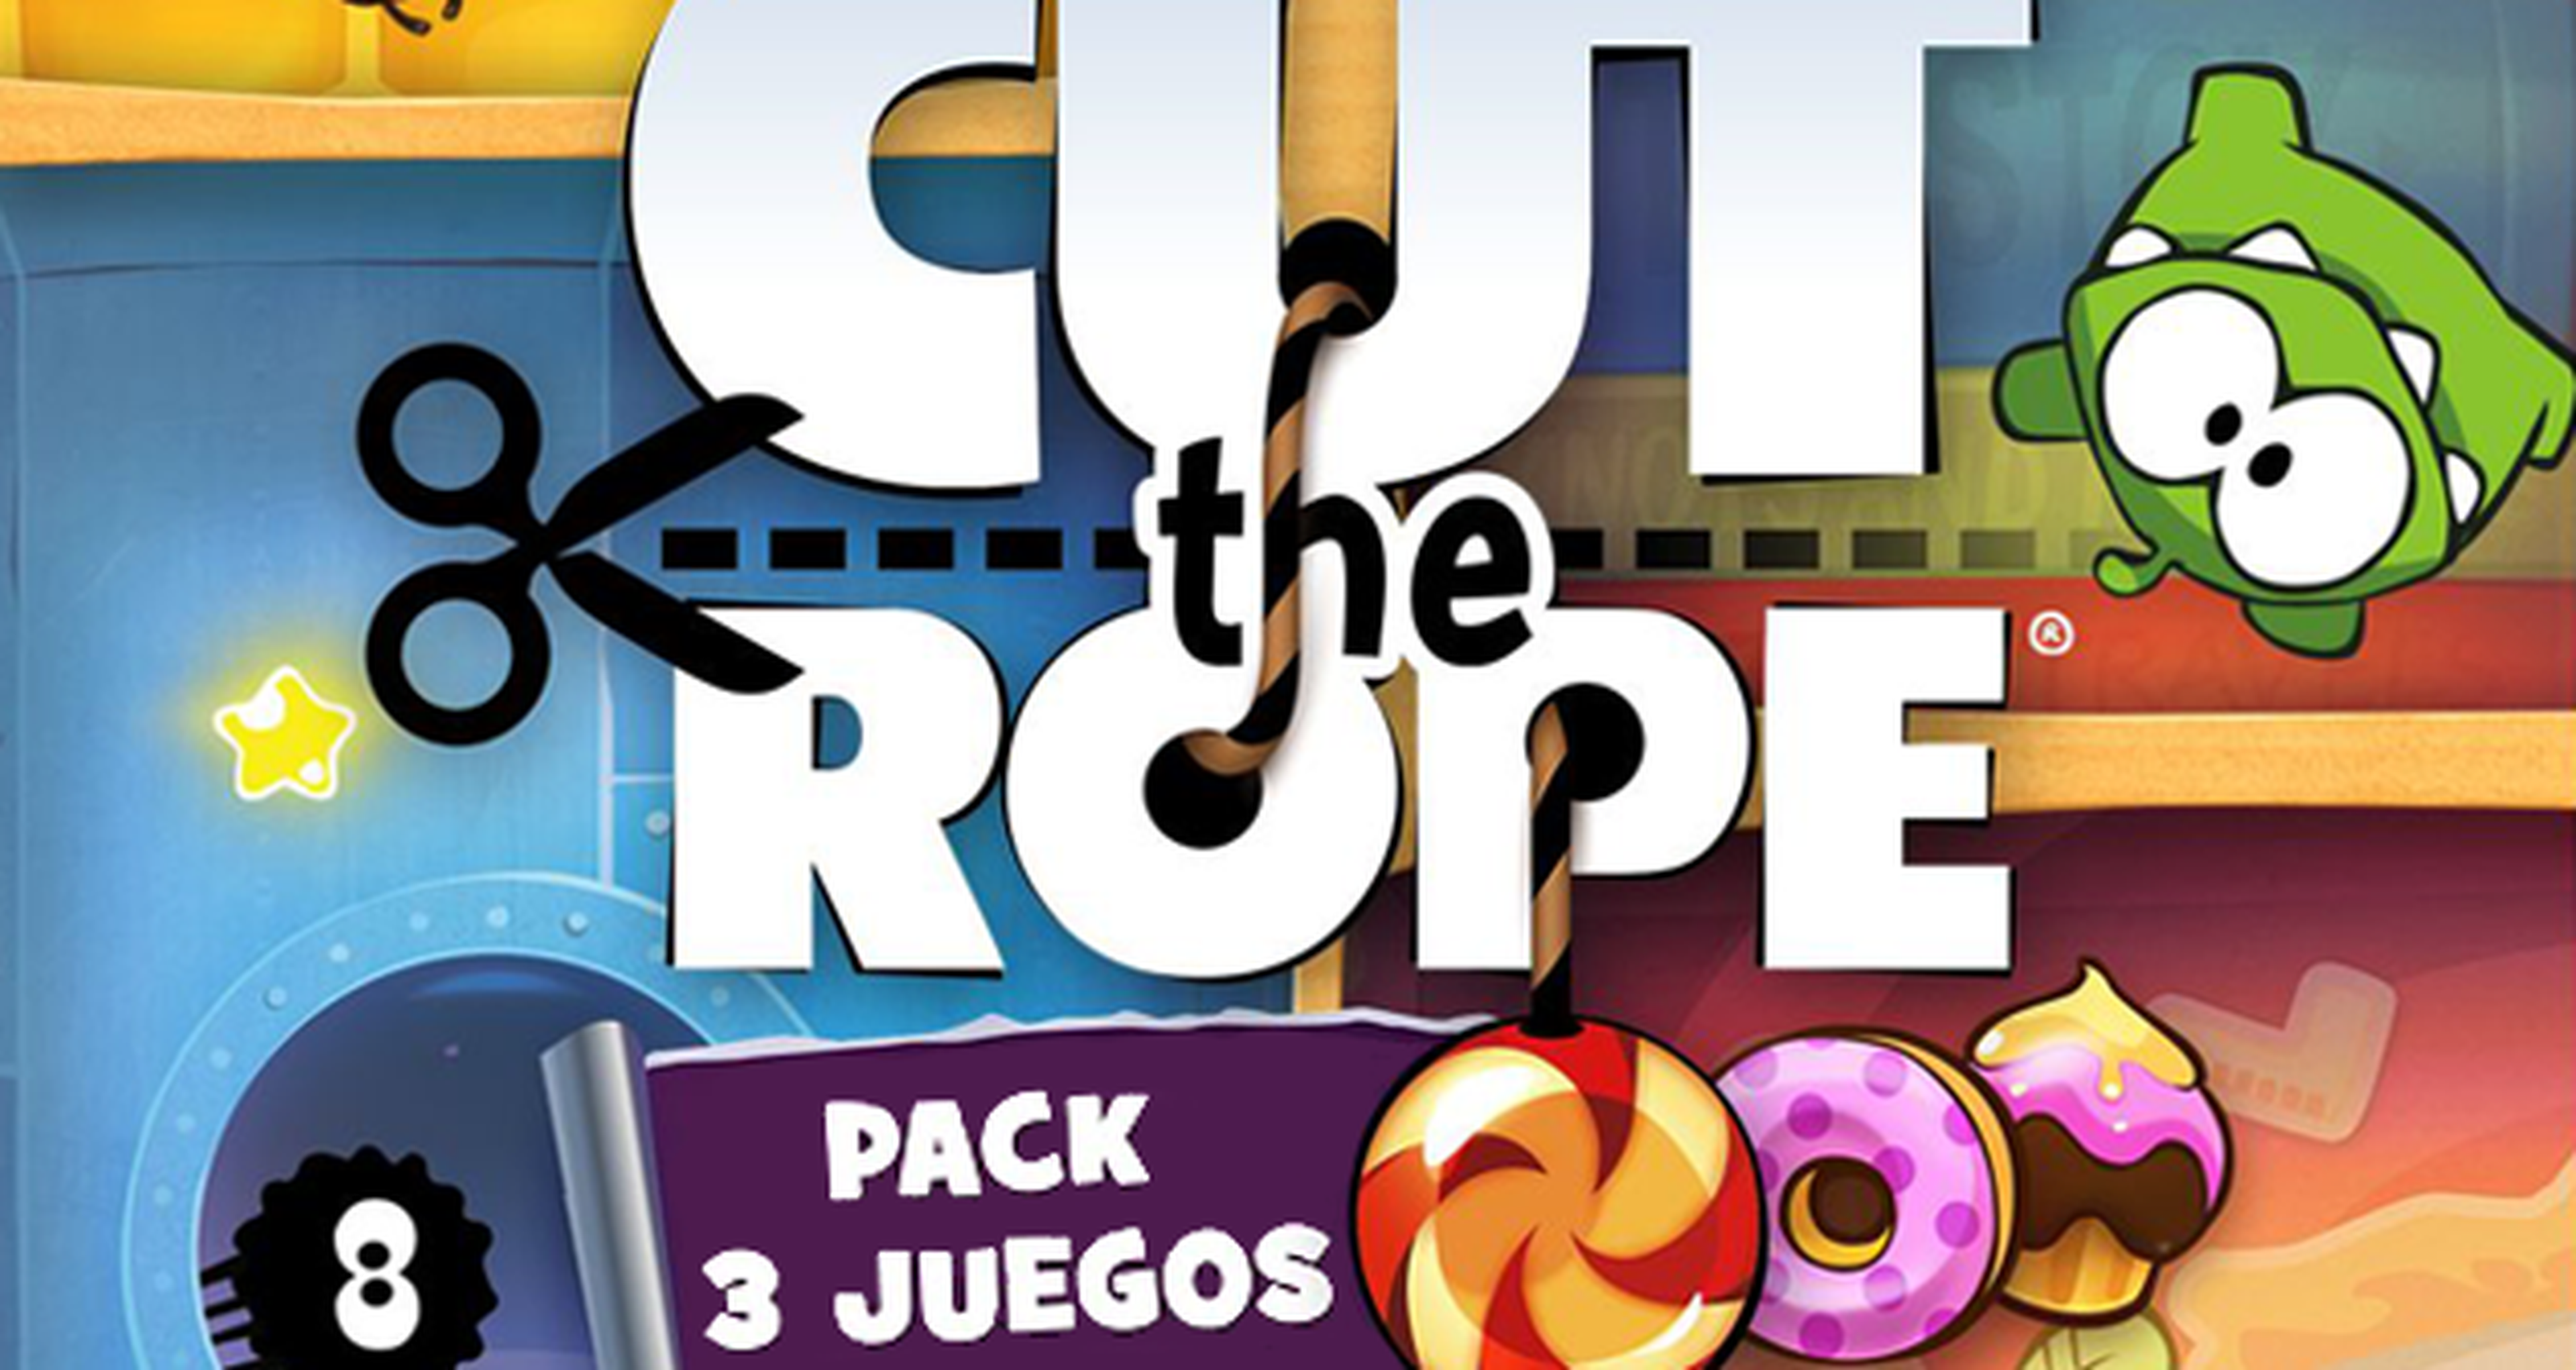 Análisis de Cut the Rope Pack 3 JUEGOS para 3DS